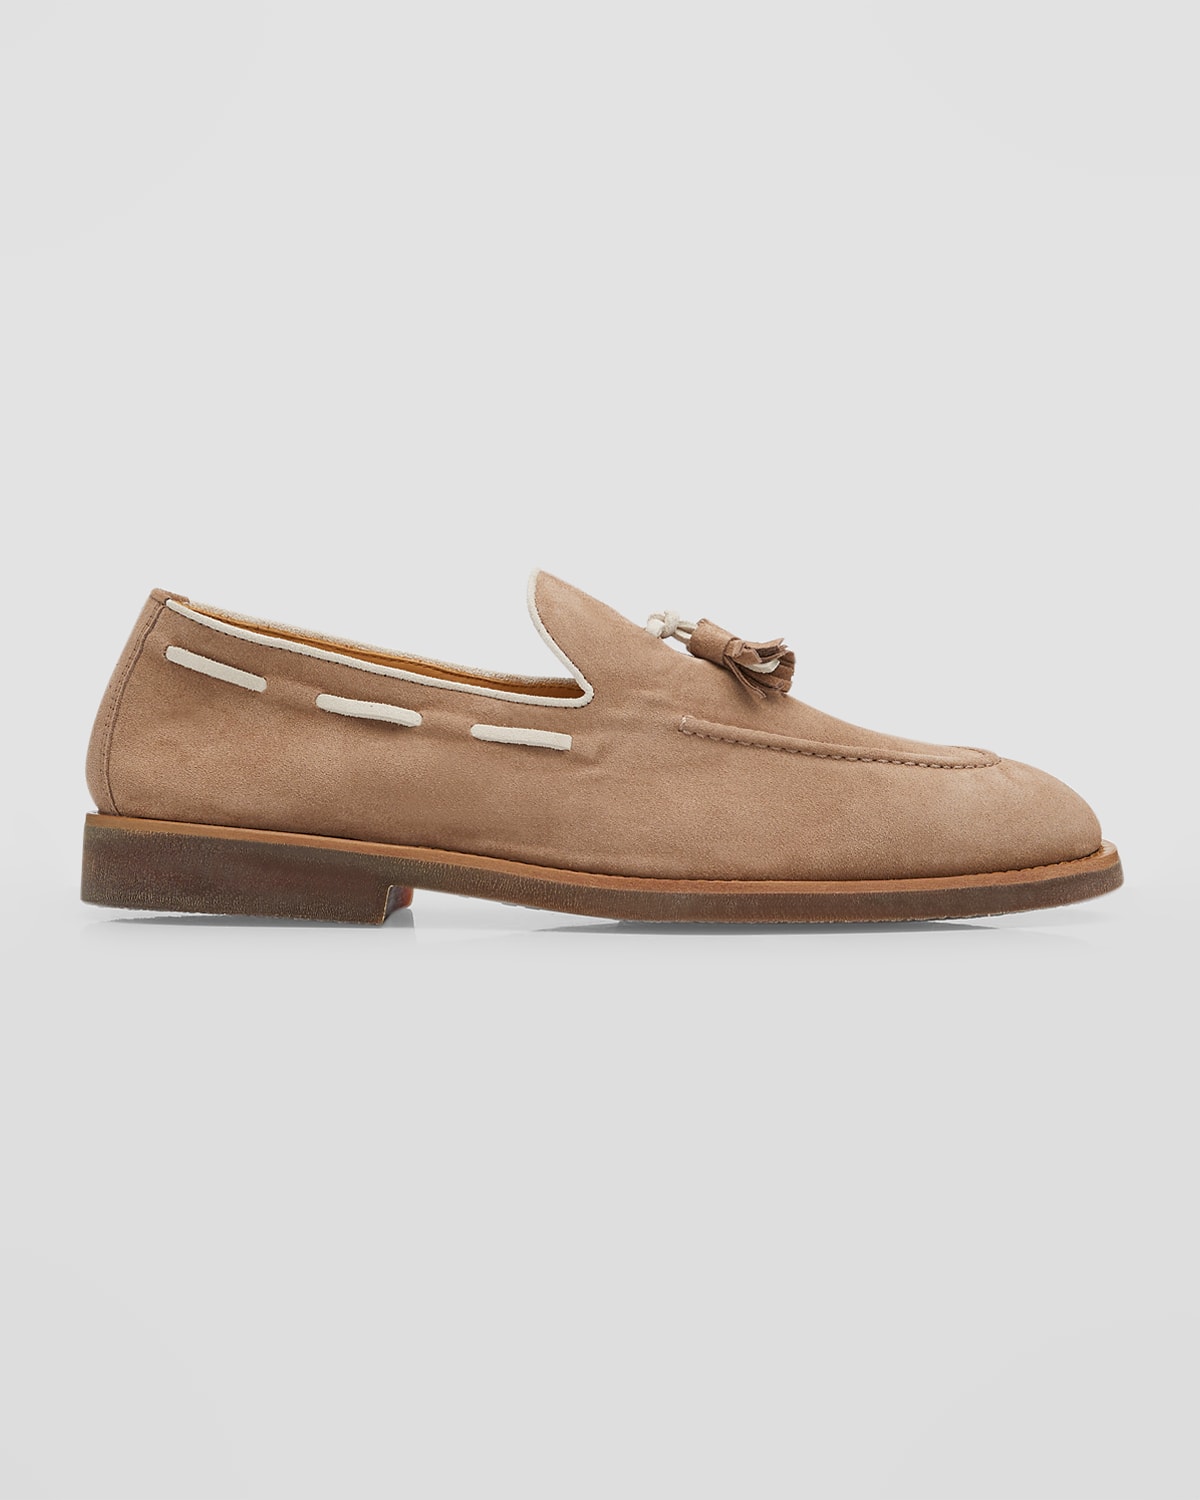 Brunello Cucinelli Men's Suede Leather Penny Loafers | Neiman Marcus